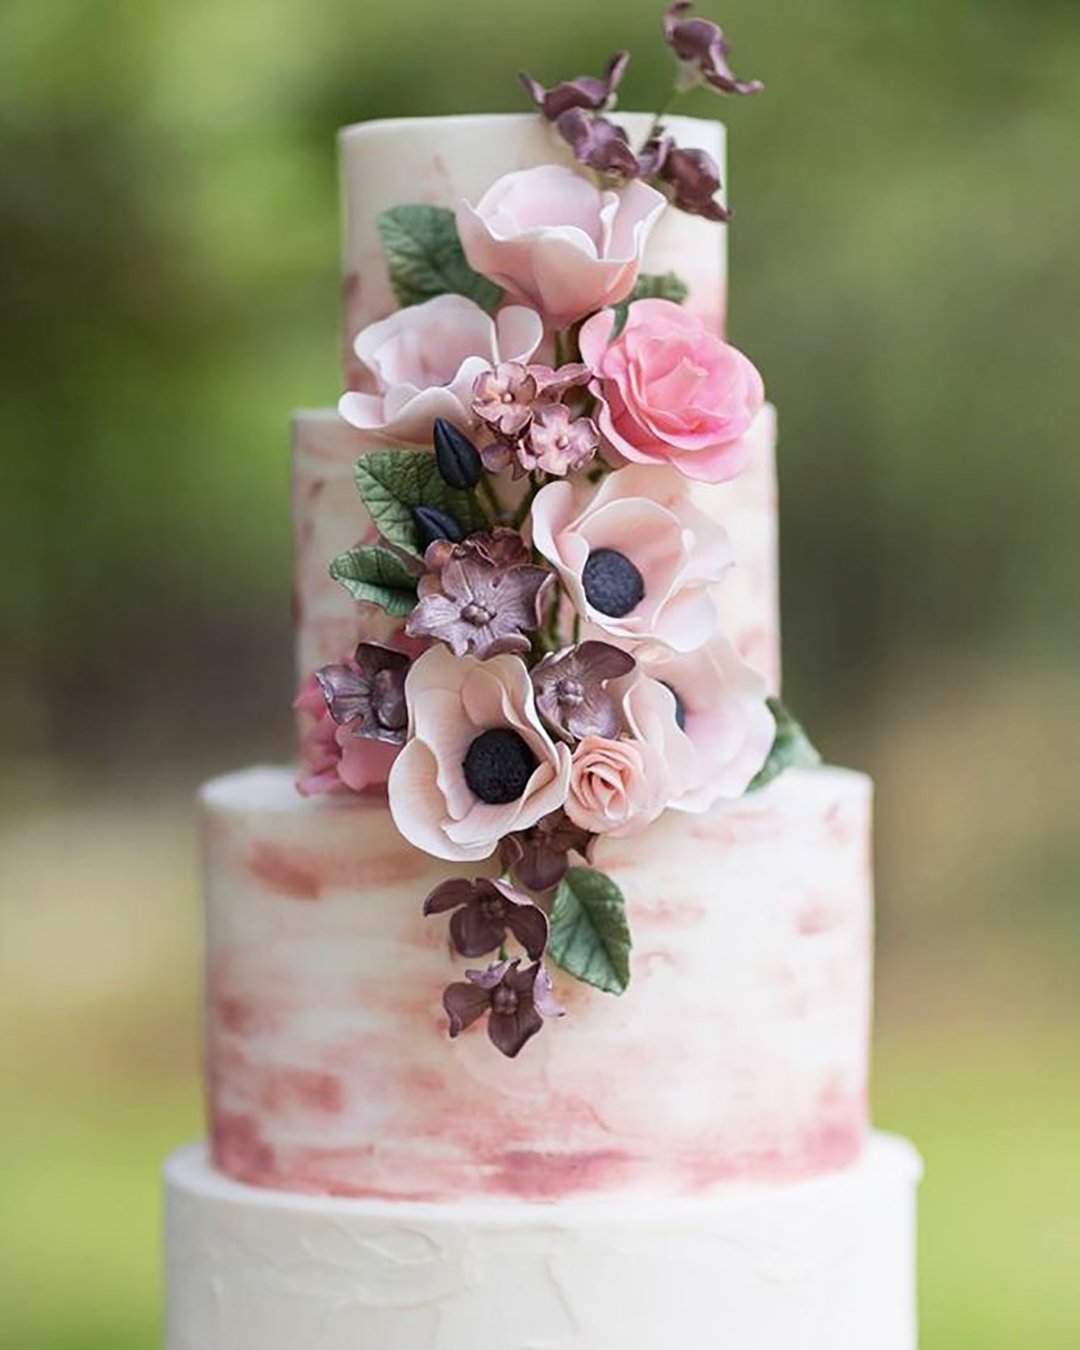 marble wedding cakes olivia smartt photo